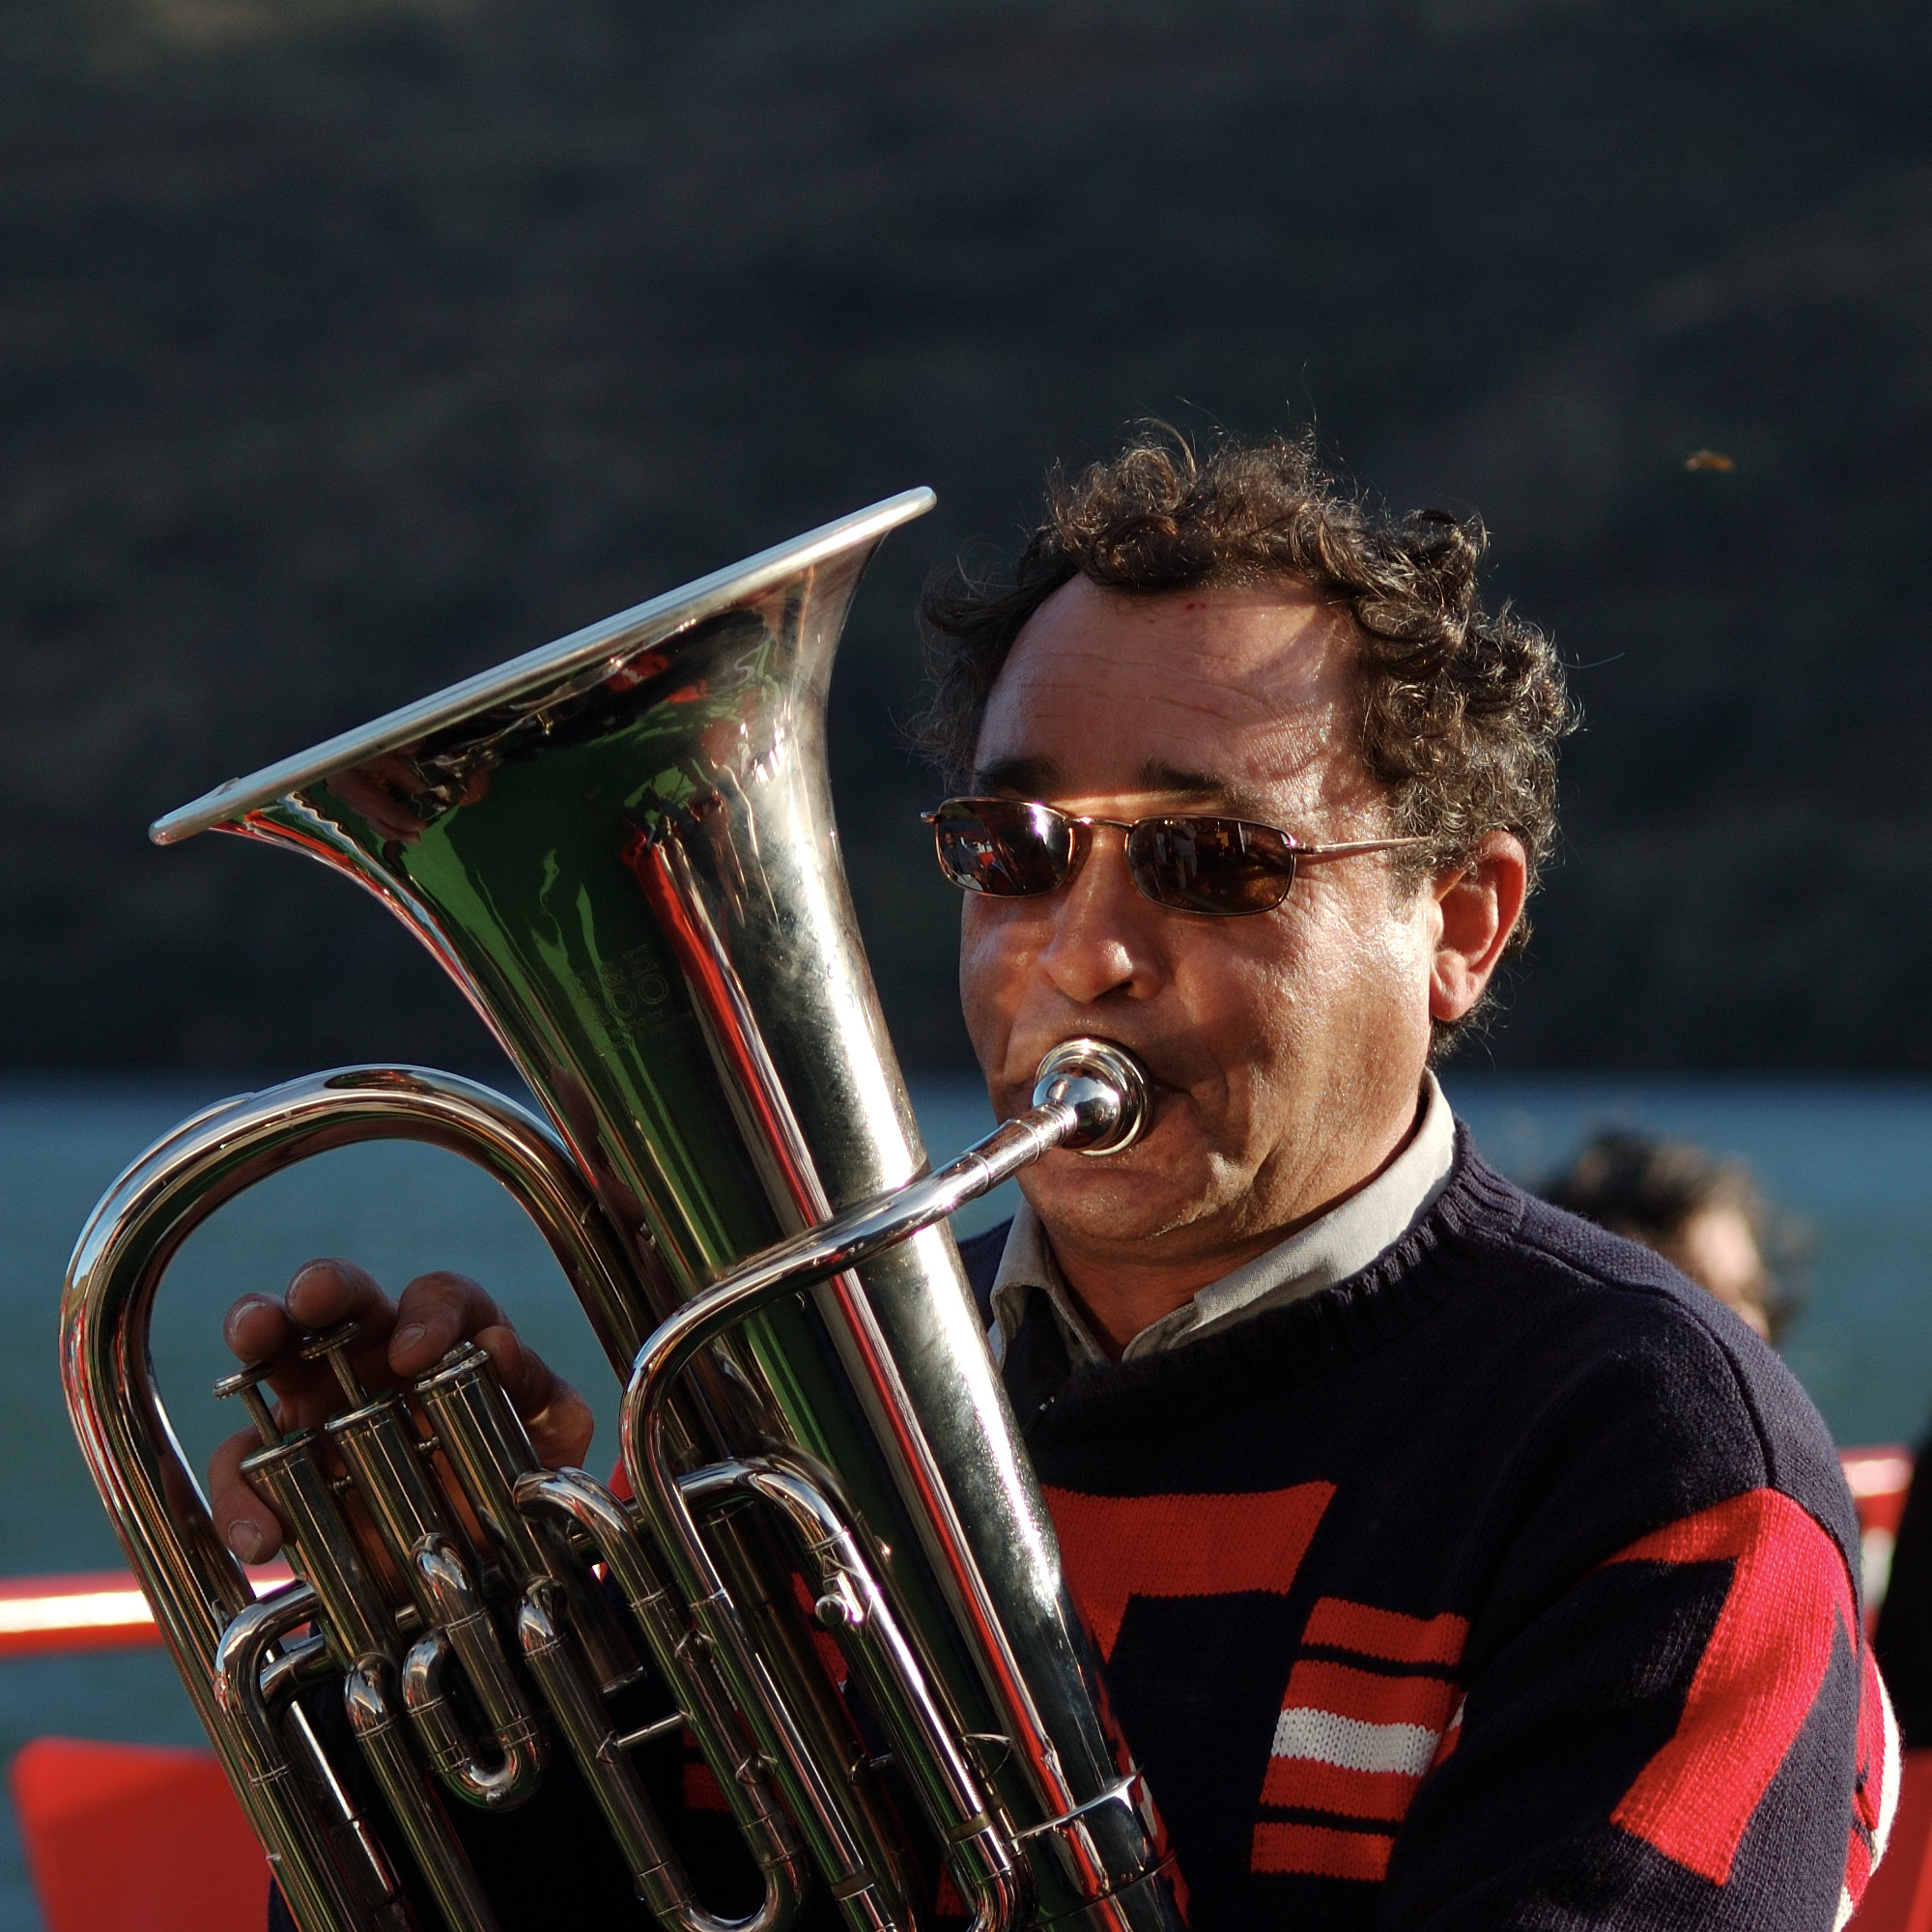 File:Tuba player (60470718).jpg - Wikimedia Commons